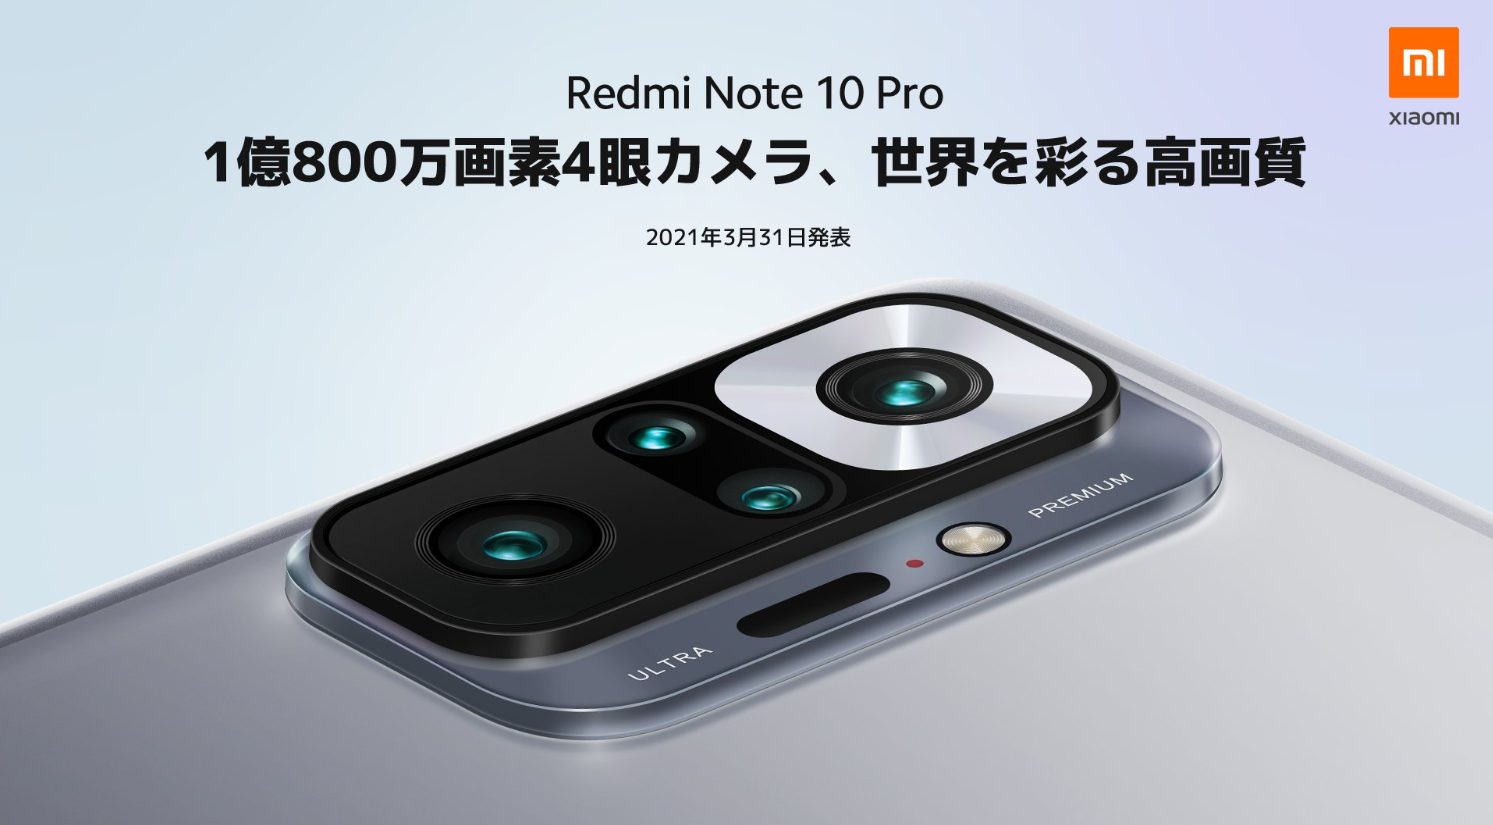 XiaomiがRedmi Note 10 Proを3月31日に日本発表へ【公式】 | telektlist